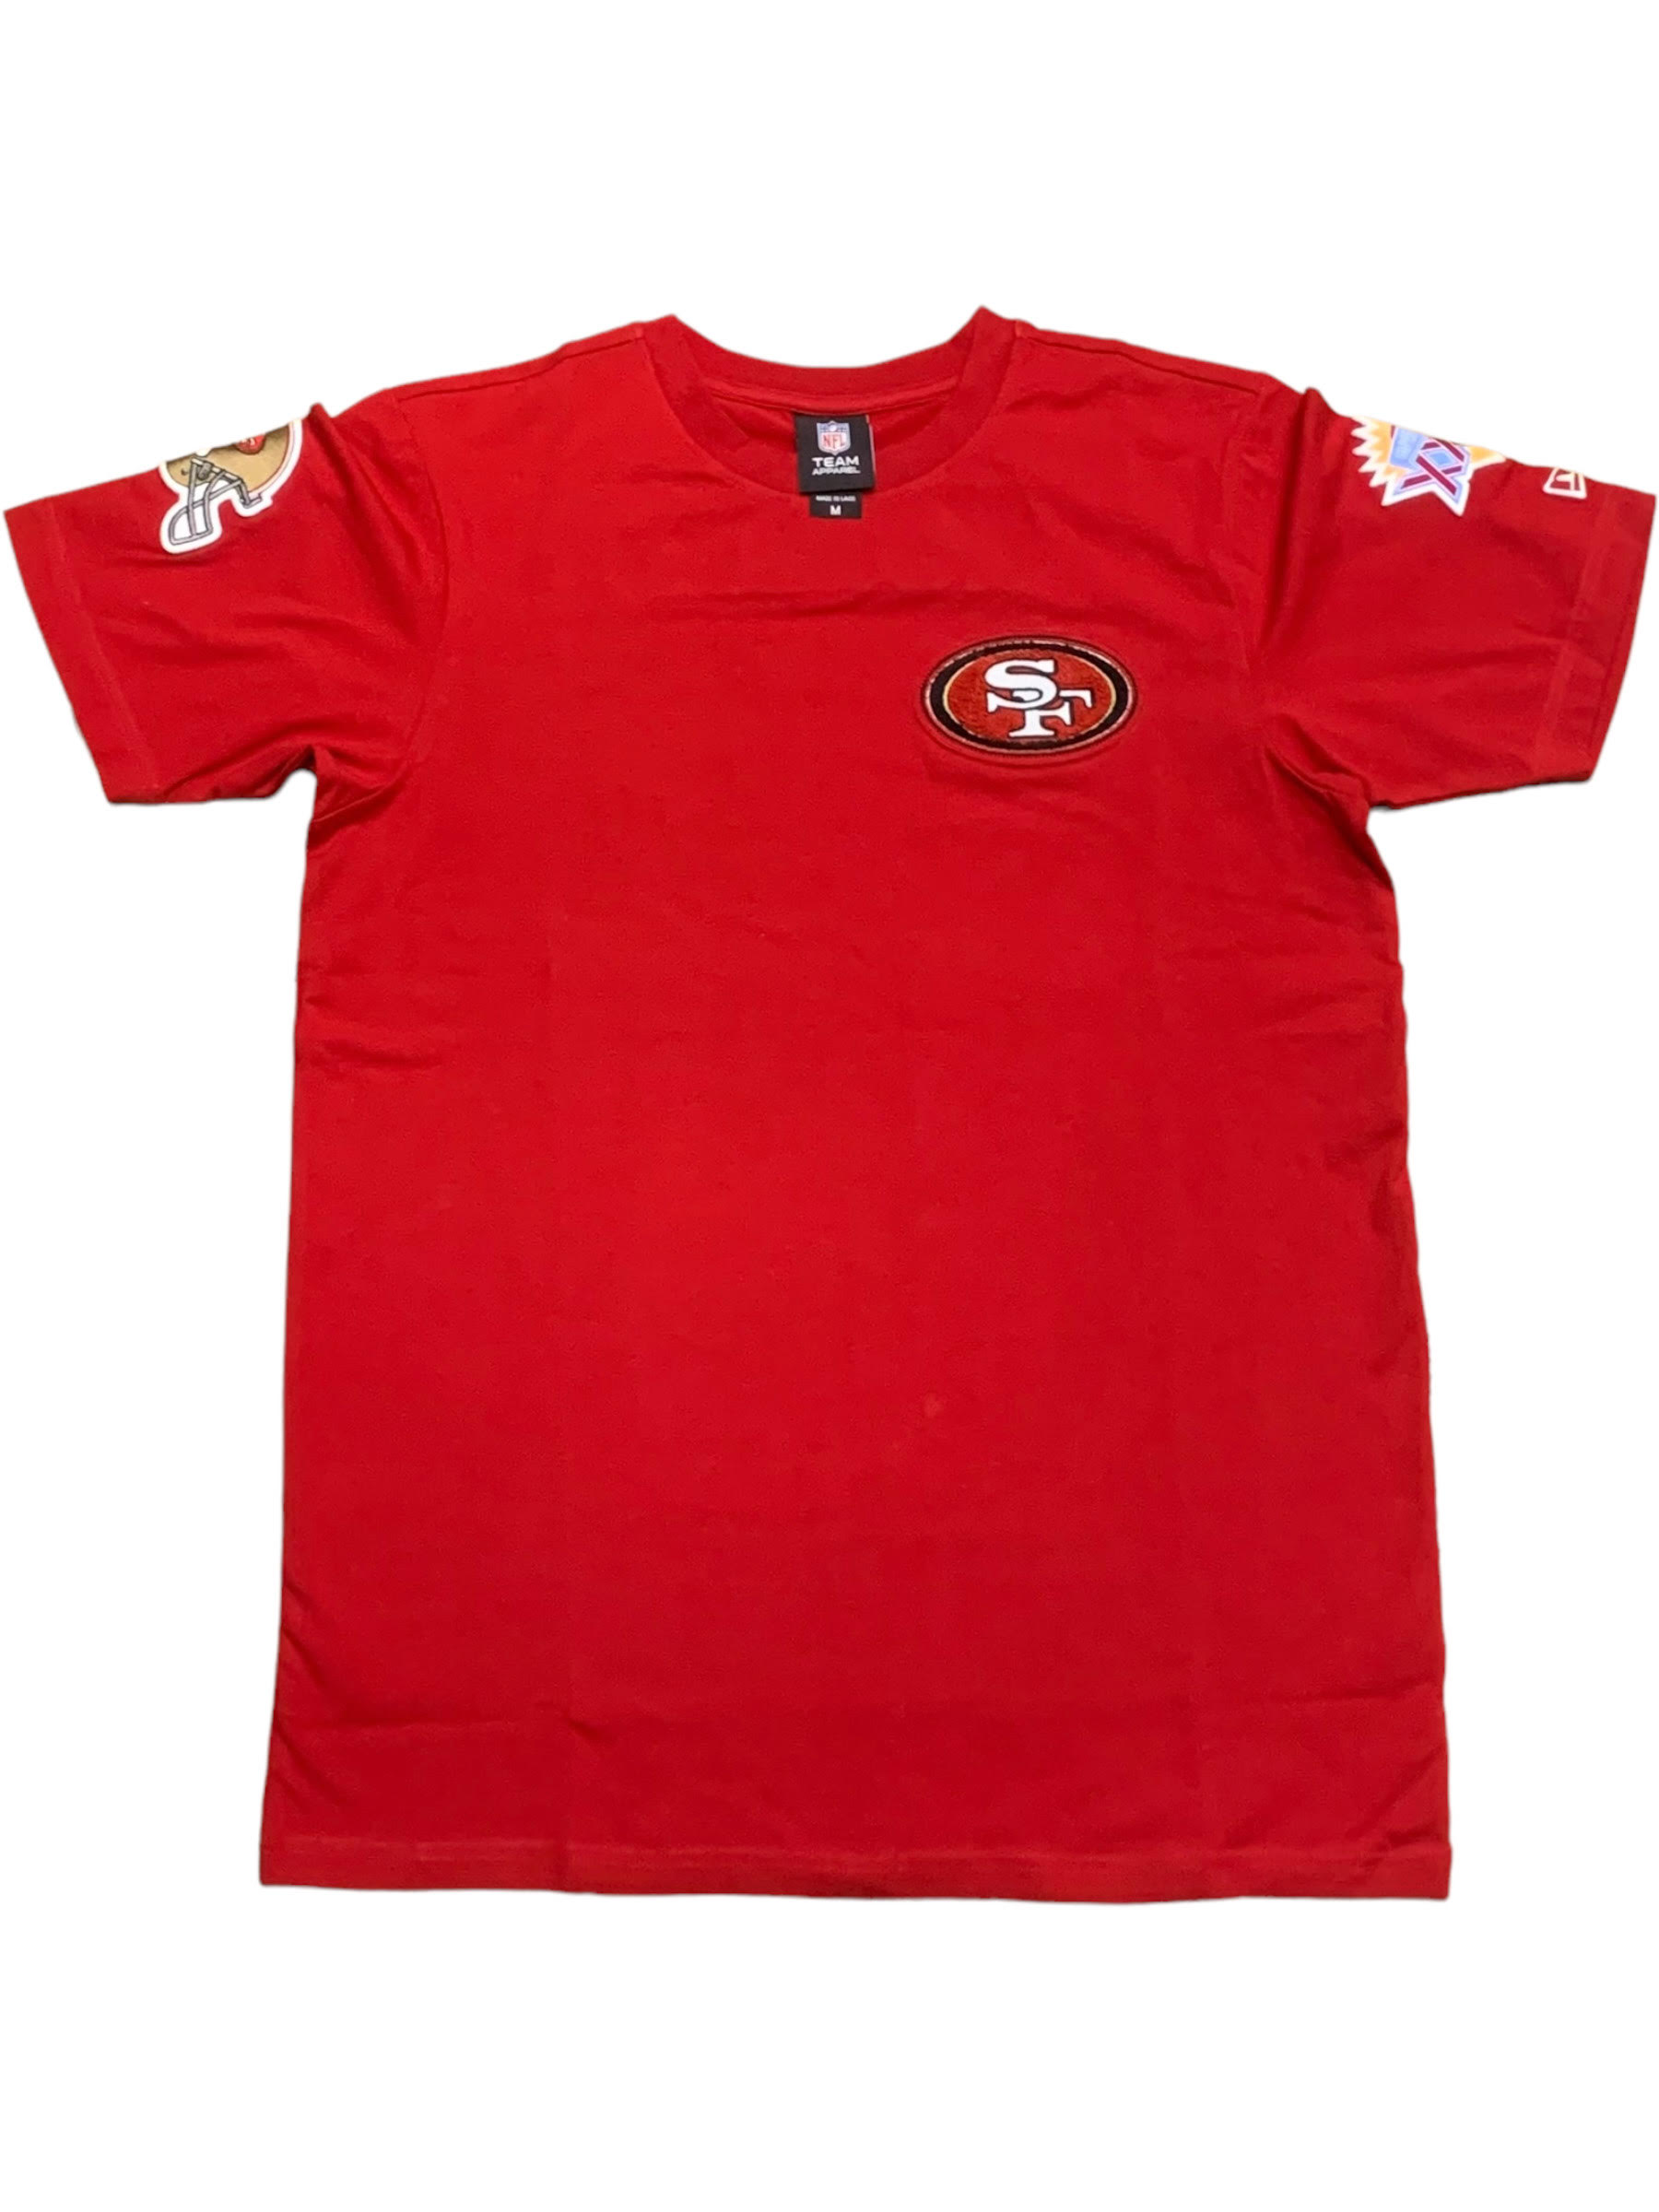 Champion Football Jersey Men's XL Red San Francisco 49ers